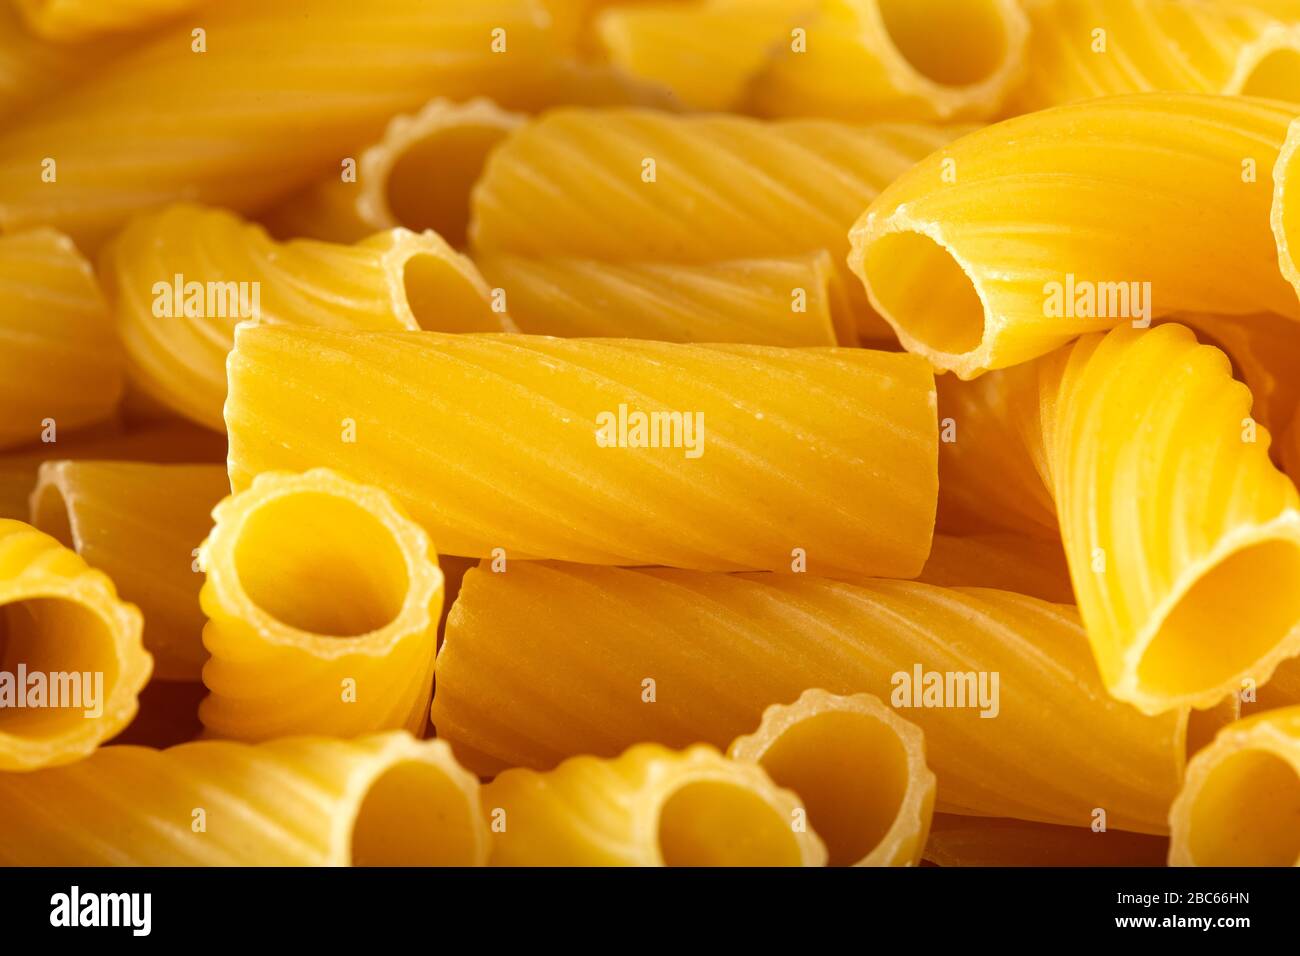 Heap of tortiglioni pasta - close up view Stock Photo